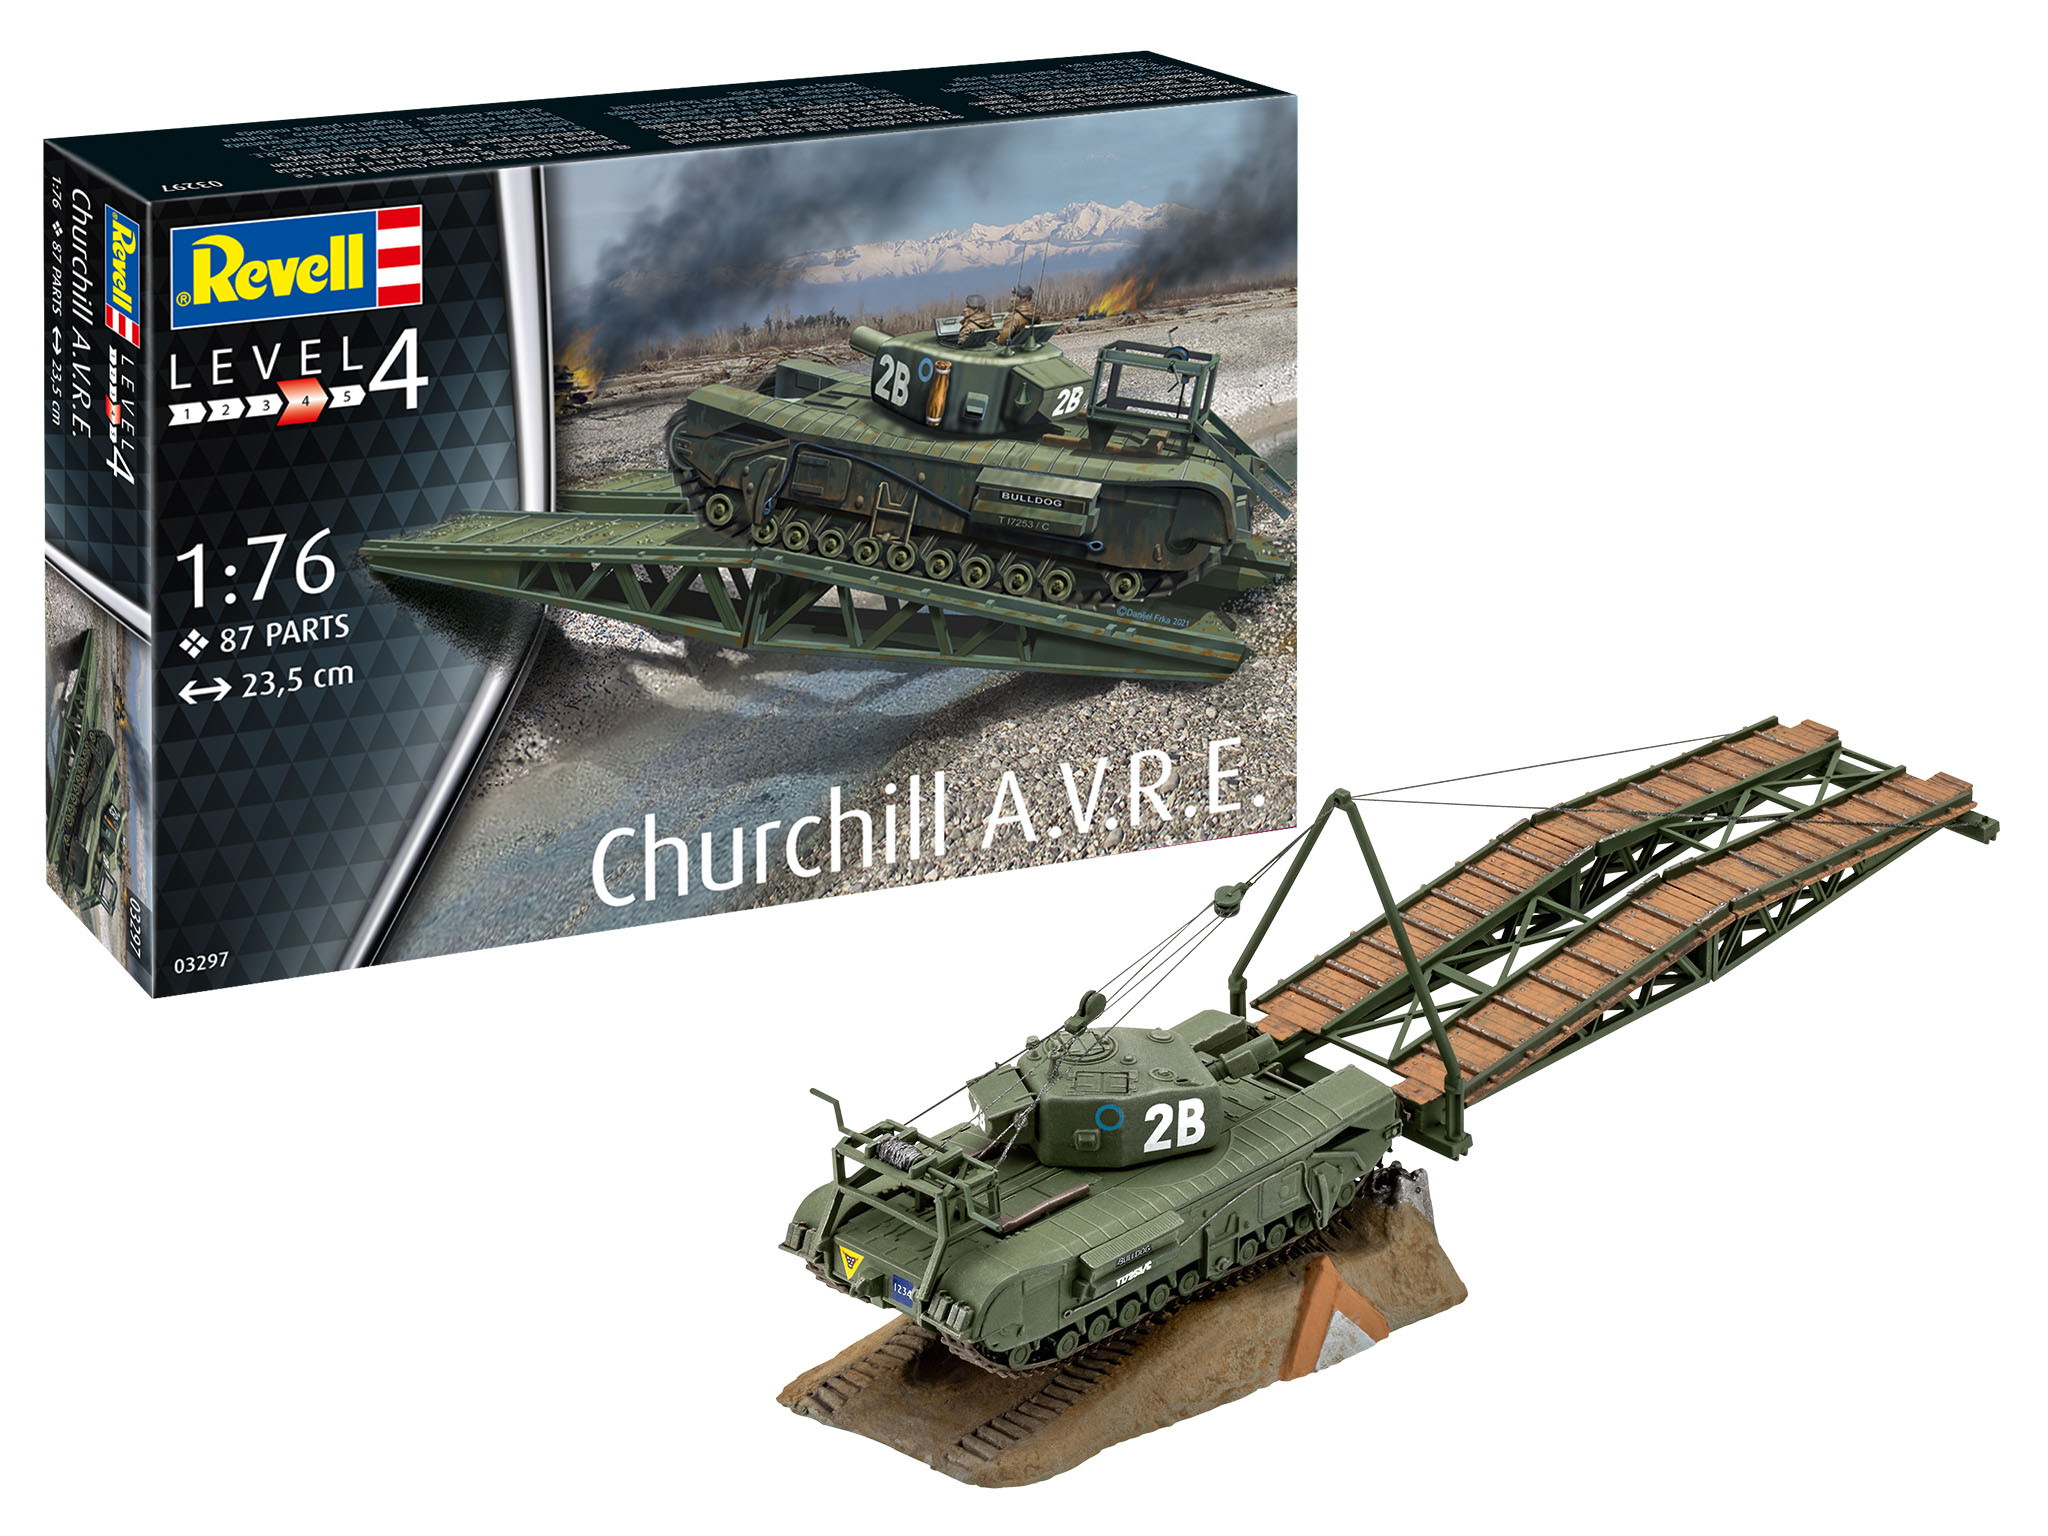 Revell 03297 - 1/76 Churchill A.V.R.E. - Neu